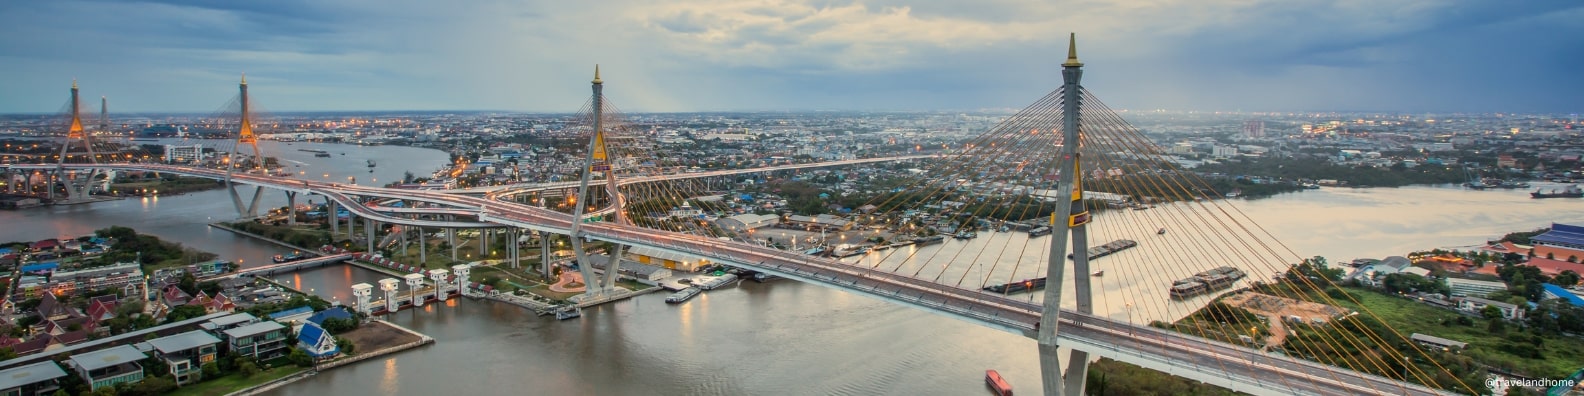 Aerial view of Bhumibol suspension bridge cross over Chao Phraya River